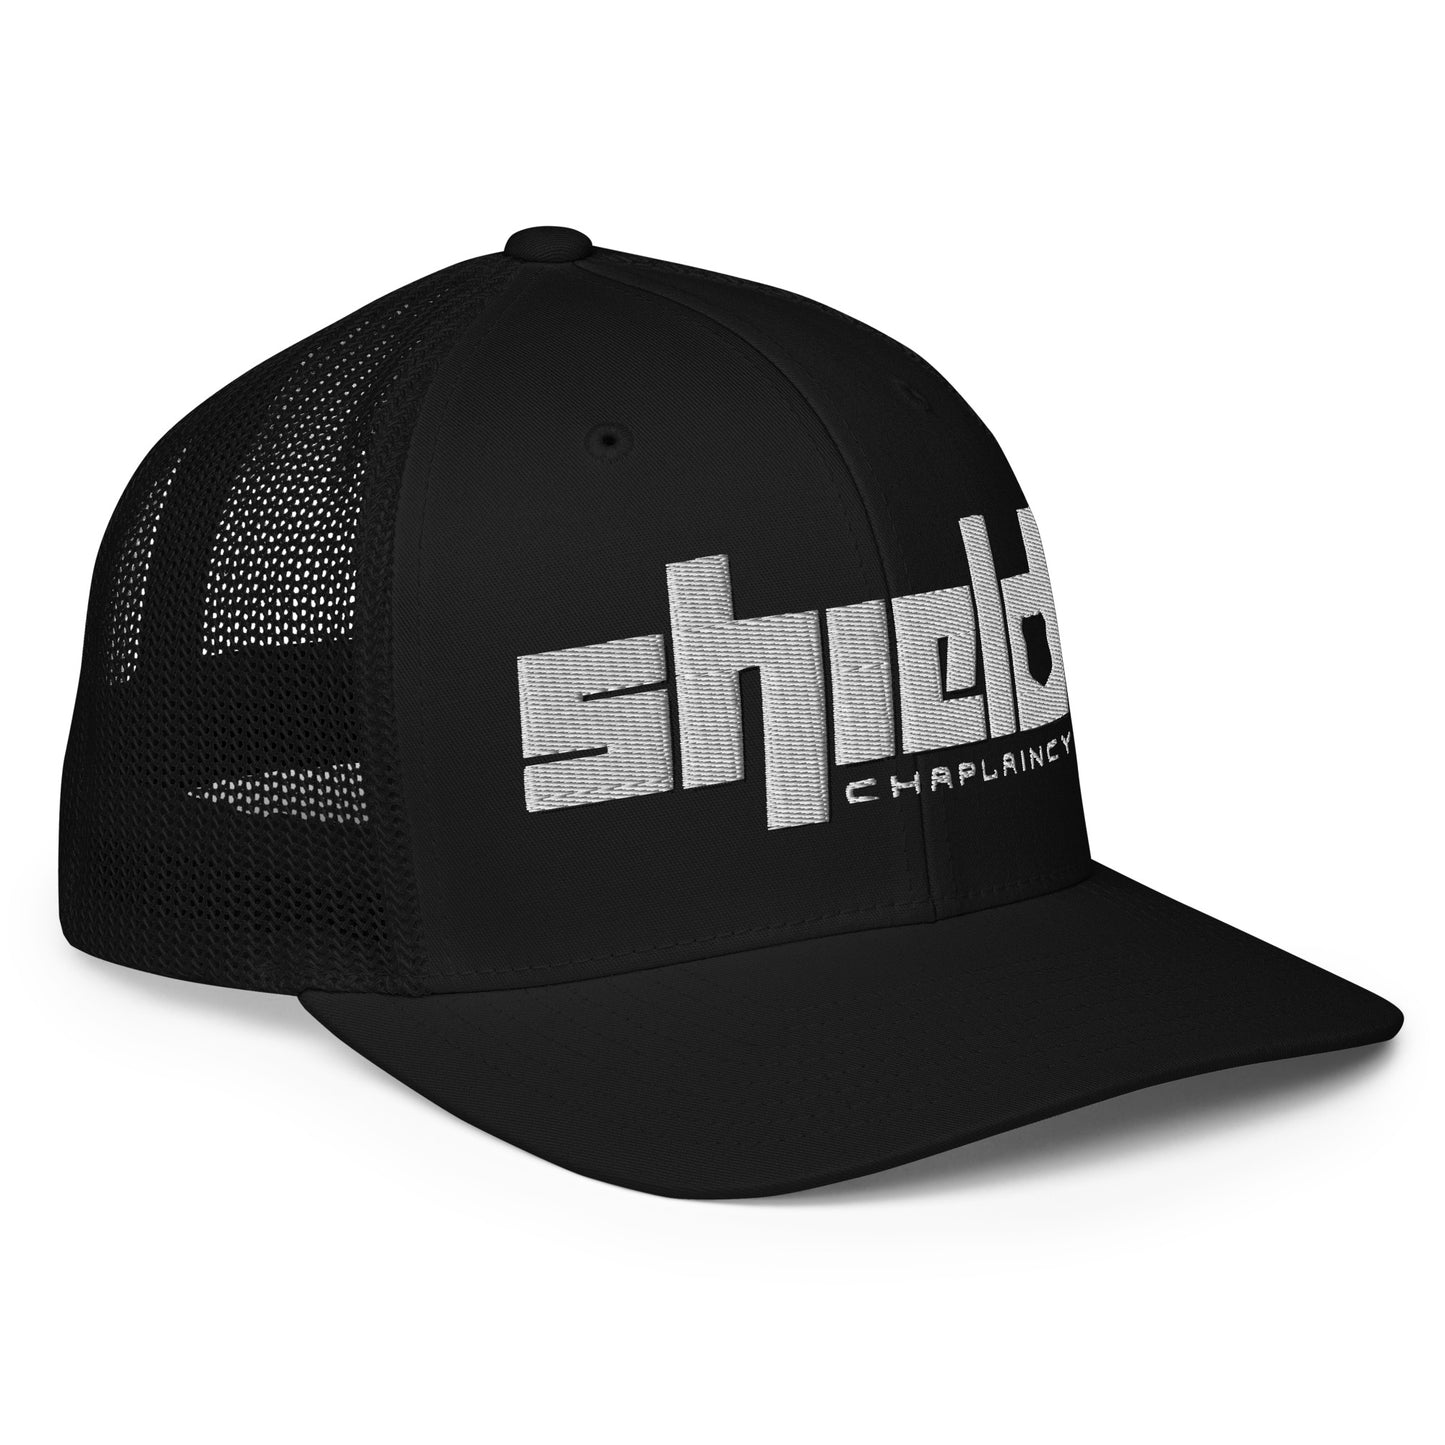 Trucker hat (flex-fit)